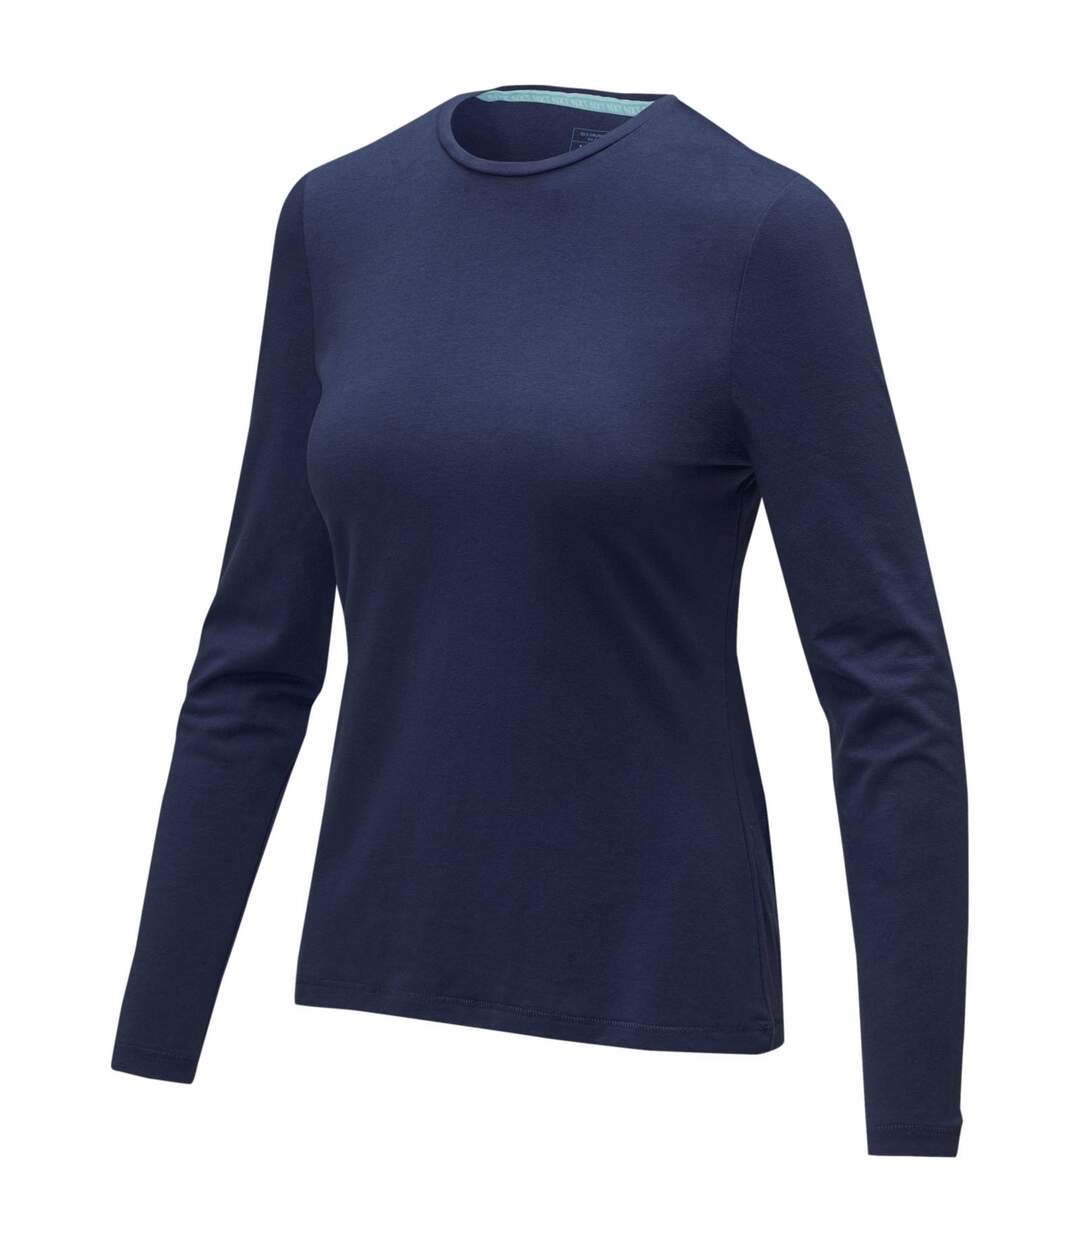 Elevate - T-shirt manches longues Ponoka - Femme (Bleu marine) - UTPF1812